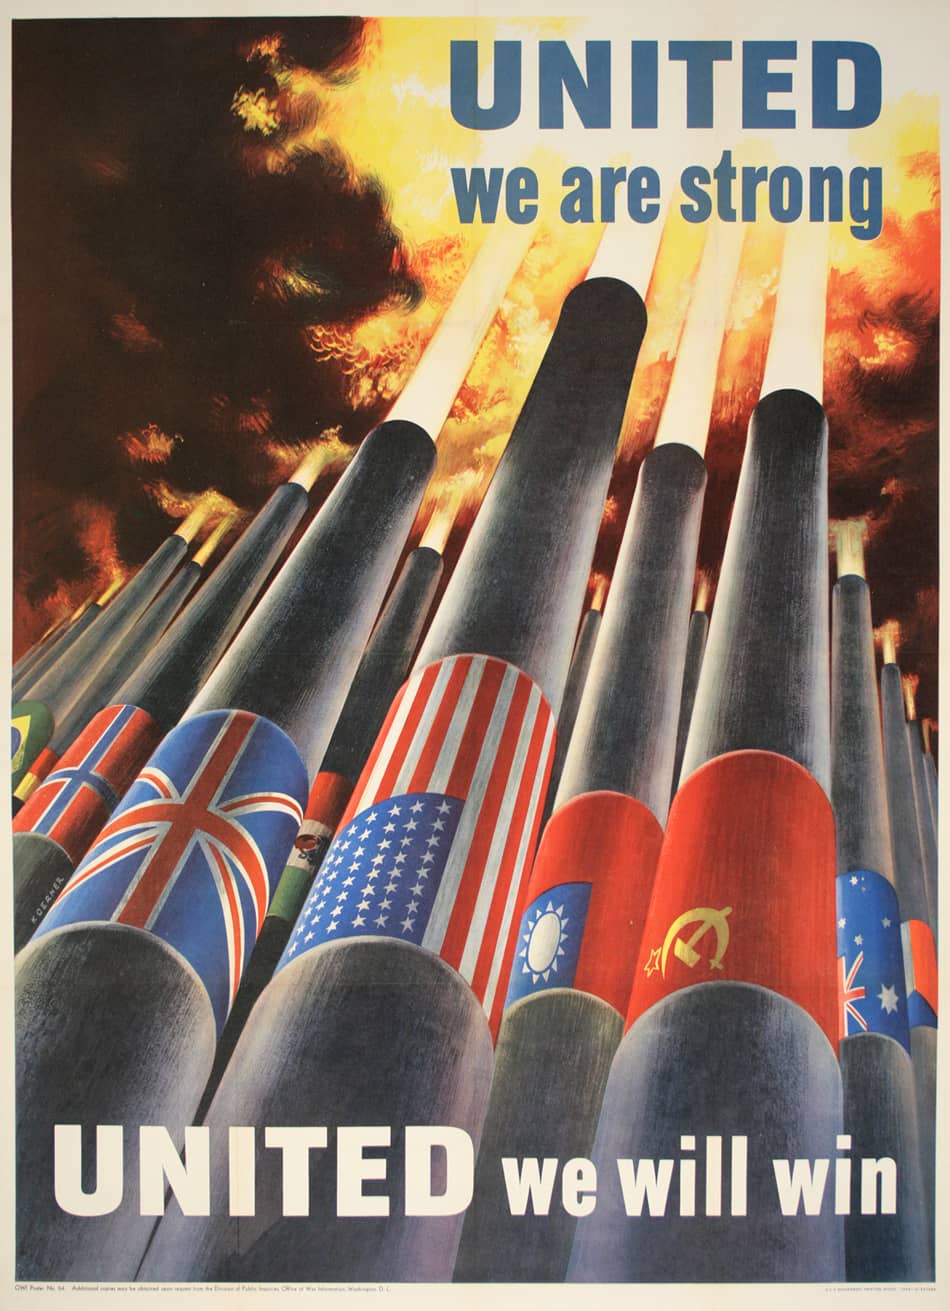 Original Vintage WWII Poster United We are Strong by Henry Koerner 1943